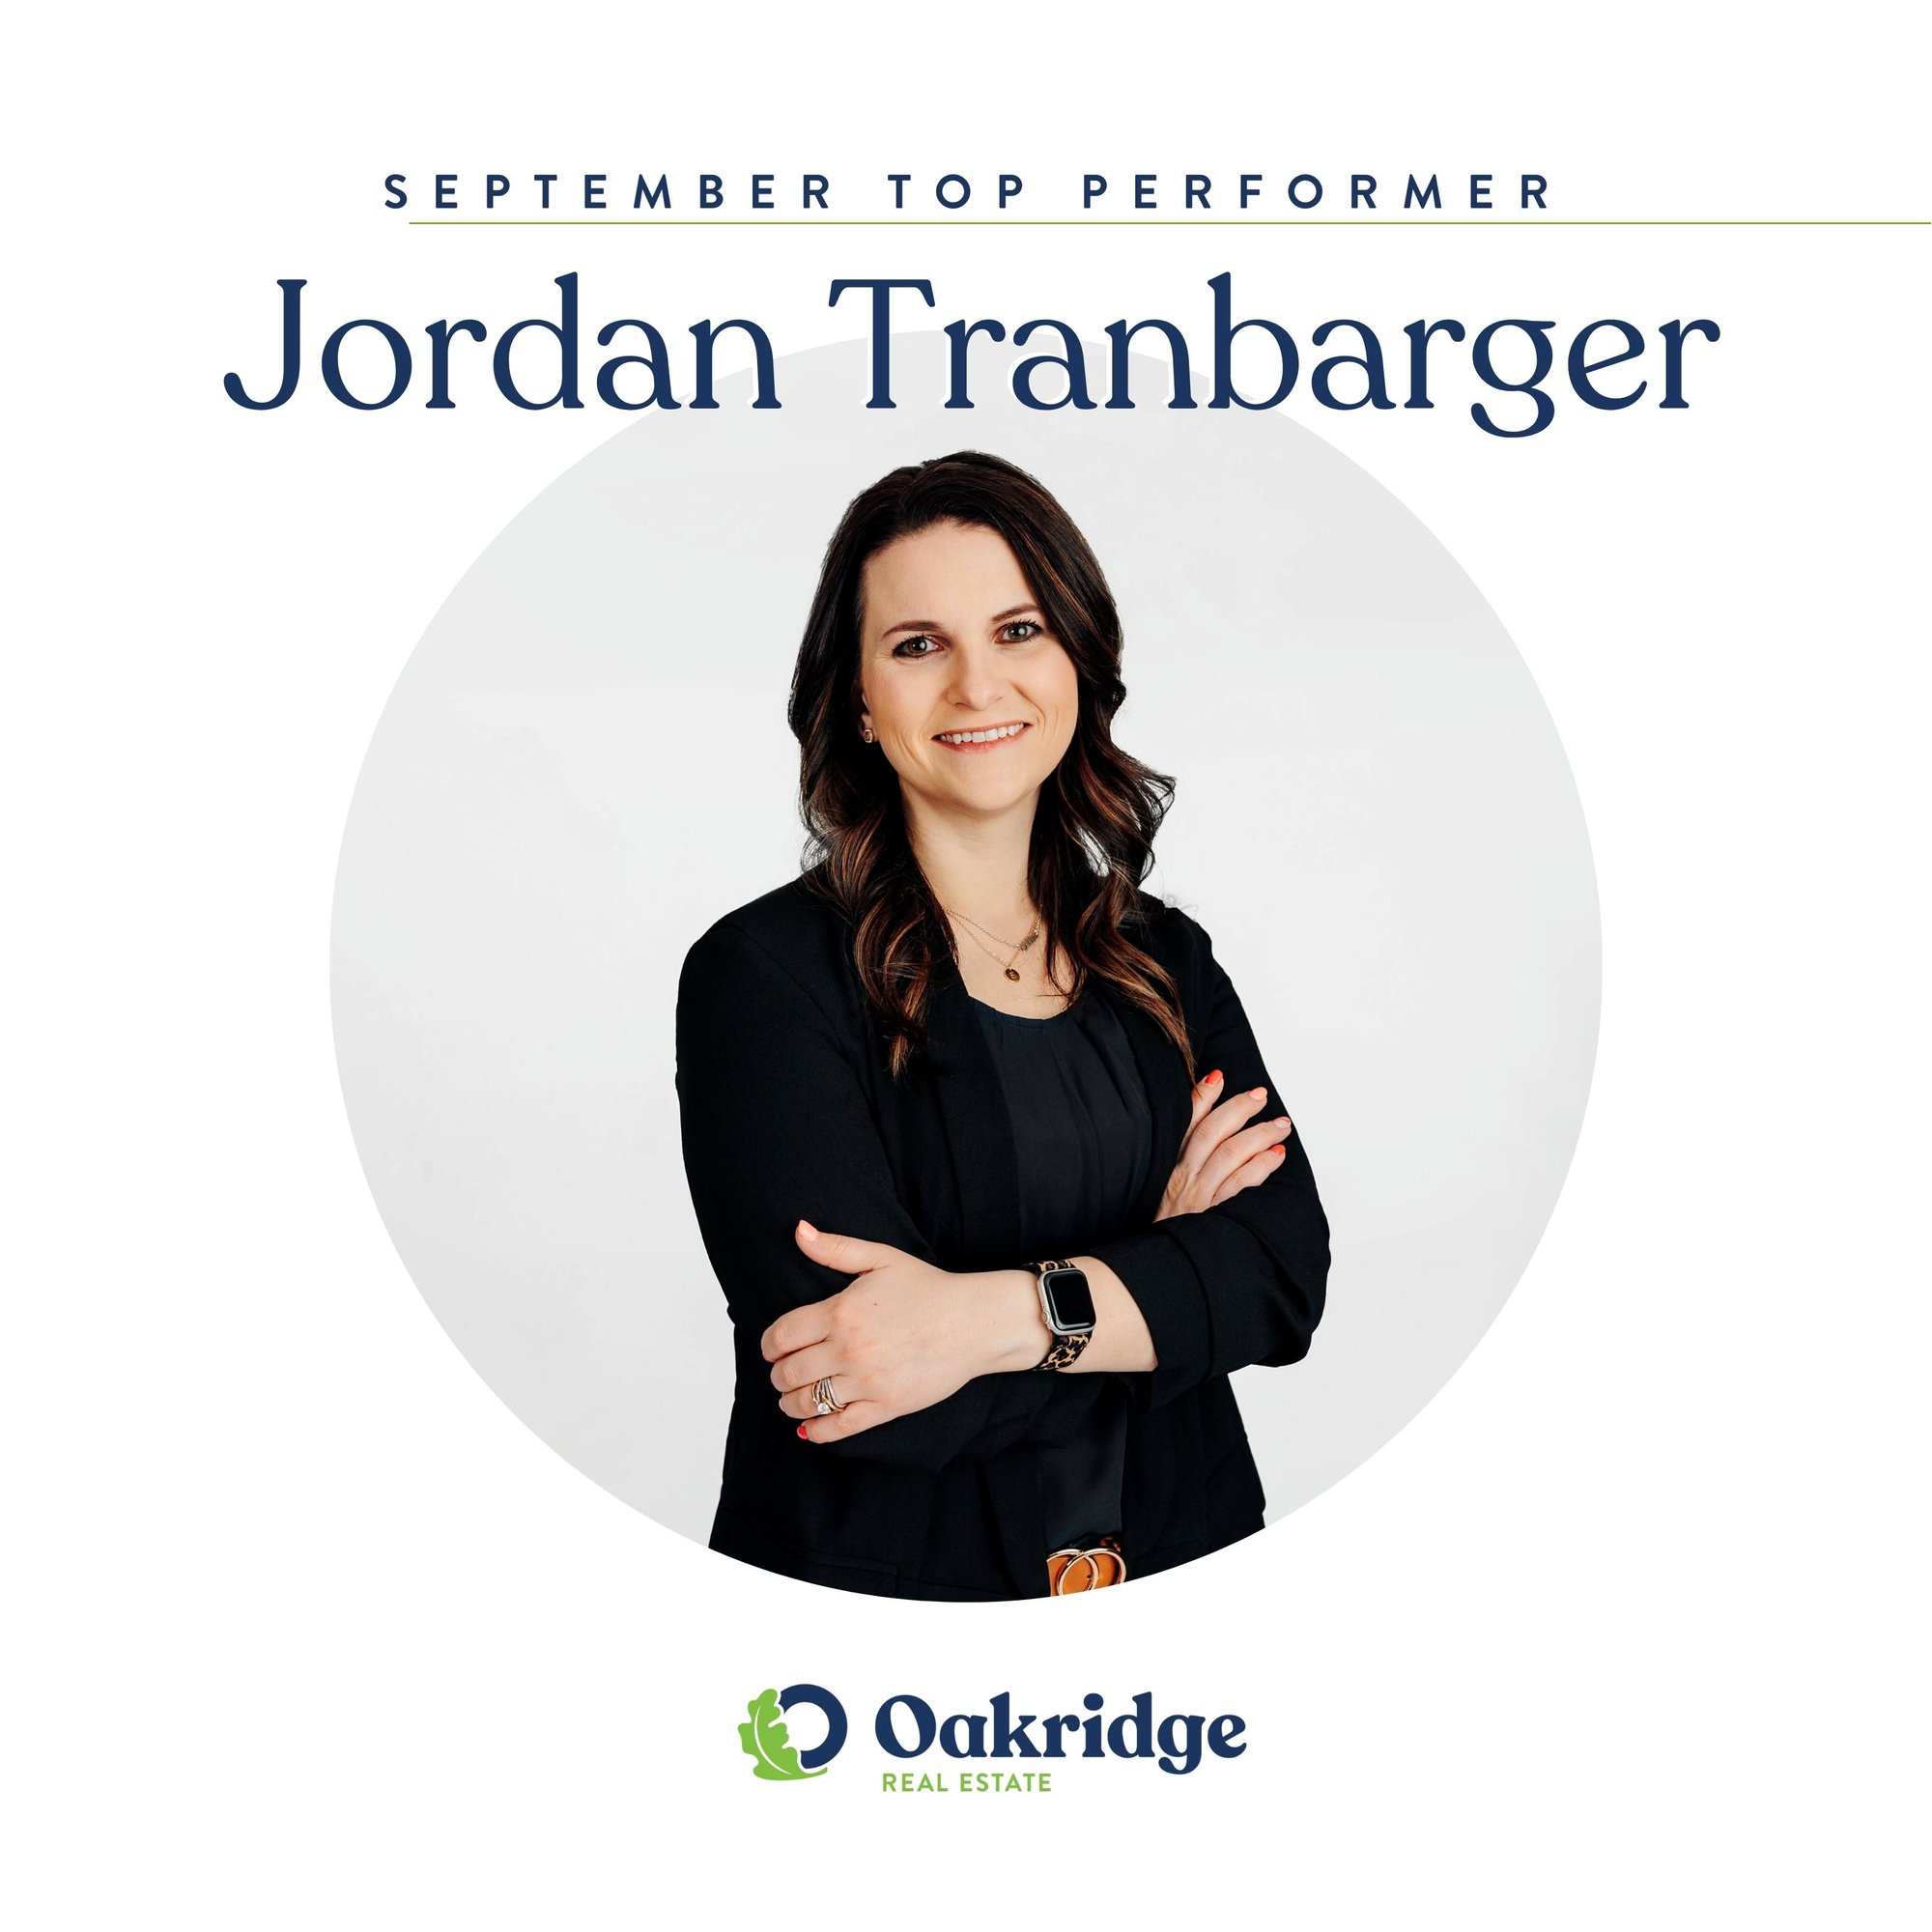 Jordan Tranbarger September Top Performer | Oakridge Real Estate